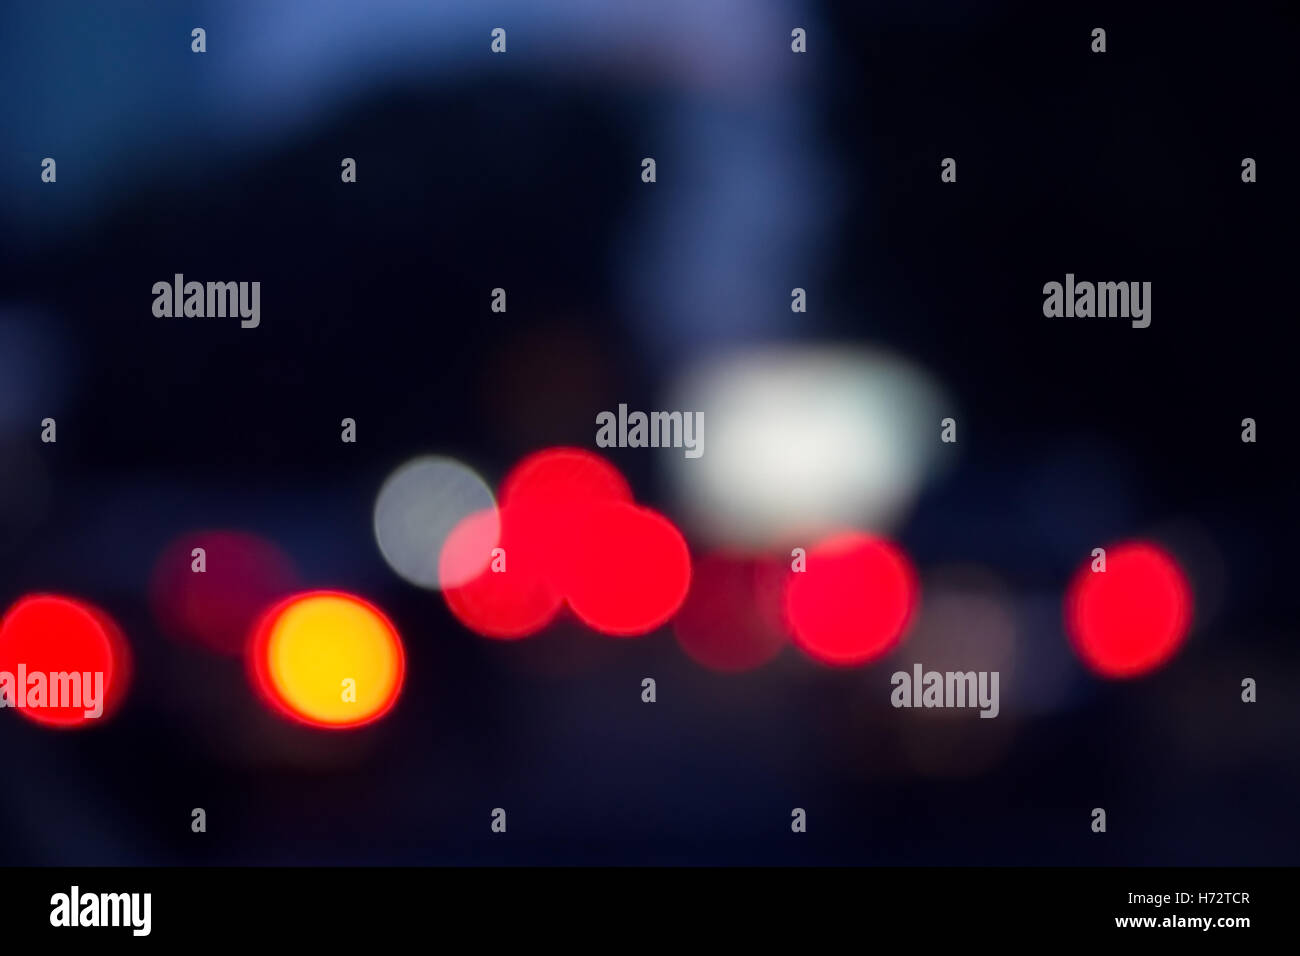 Blur/defocus vehicles tail lights at dawn or dusk. Stock Photo